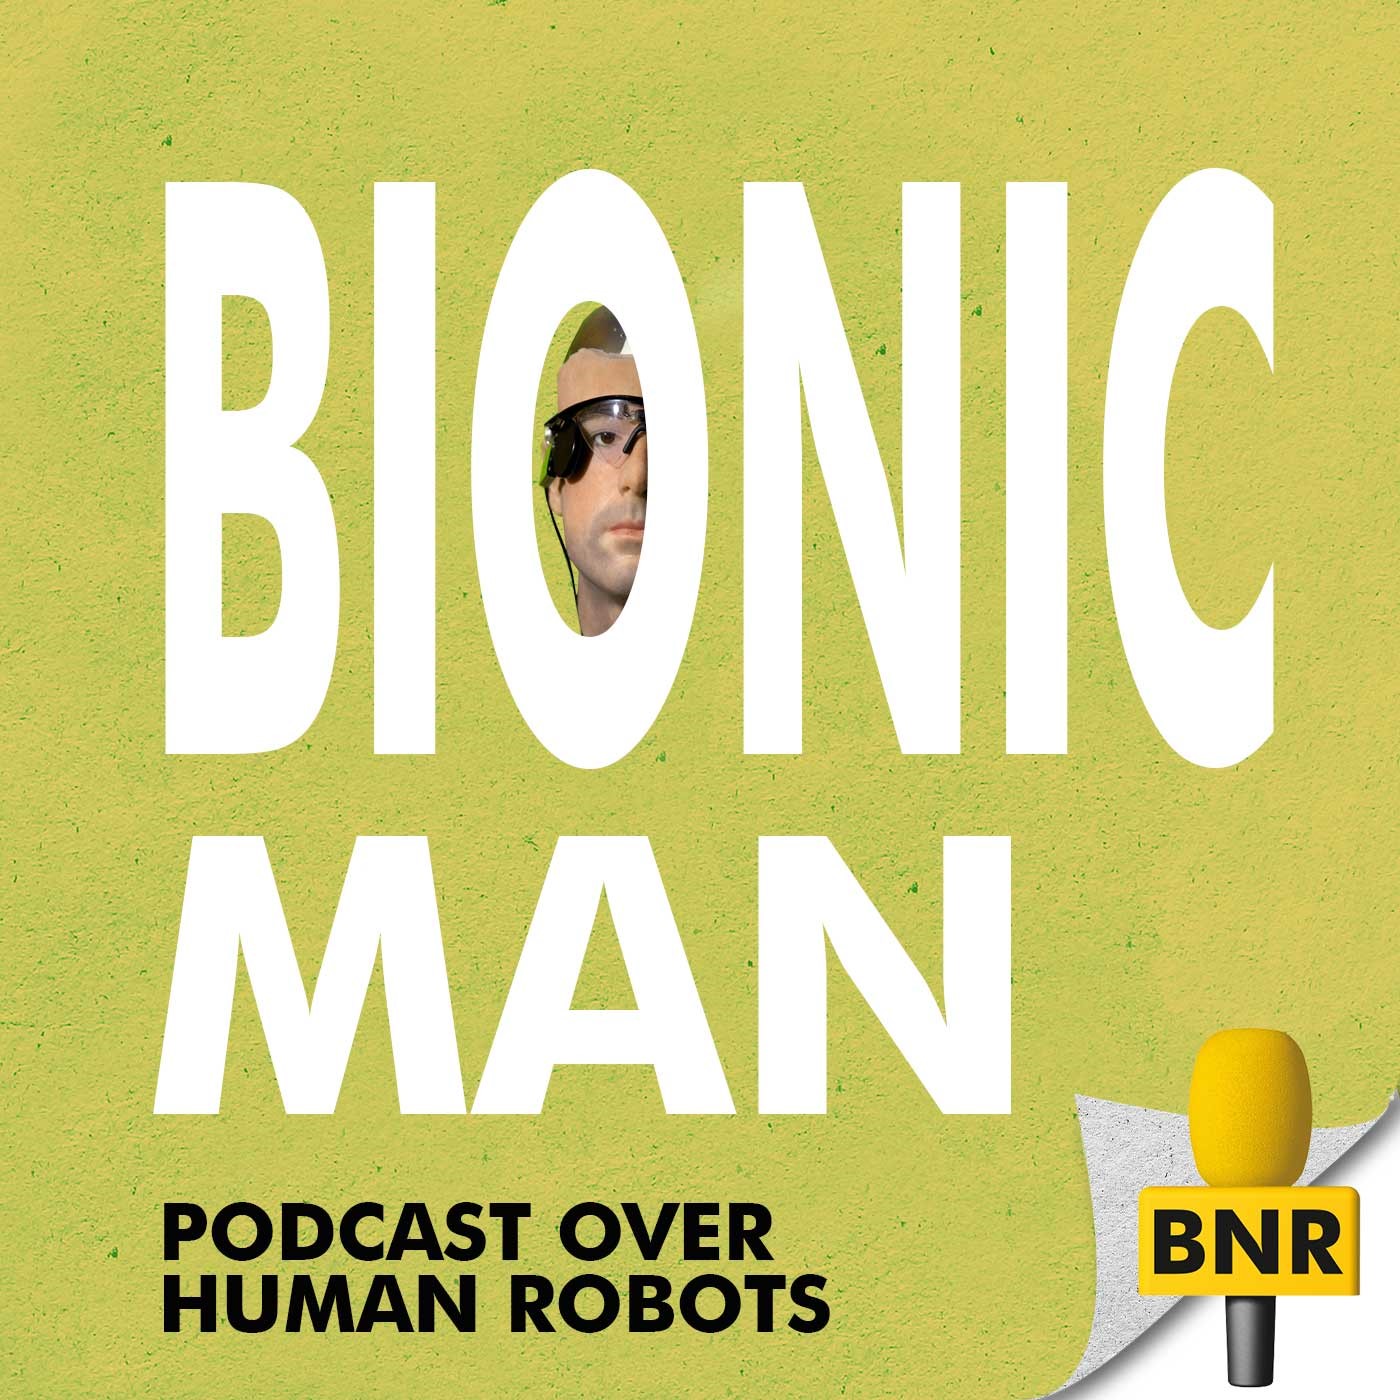 Bionic Man